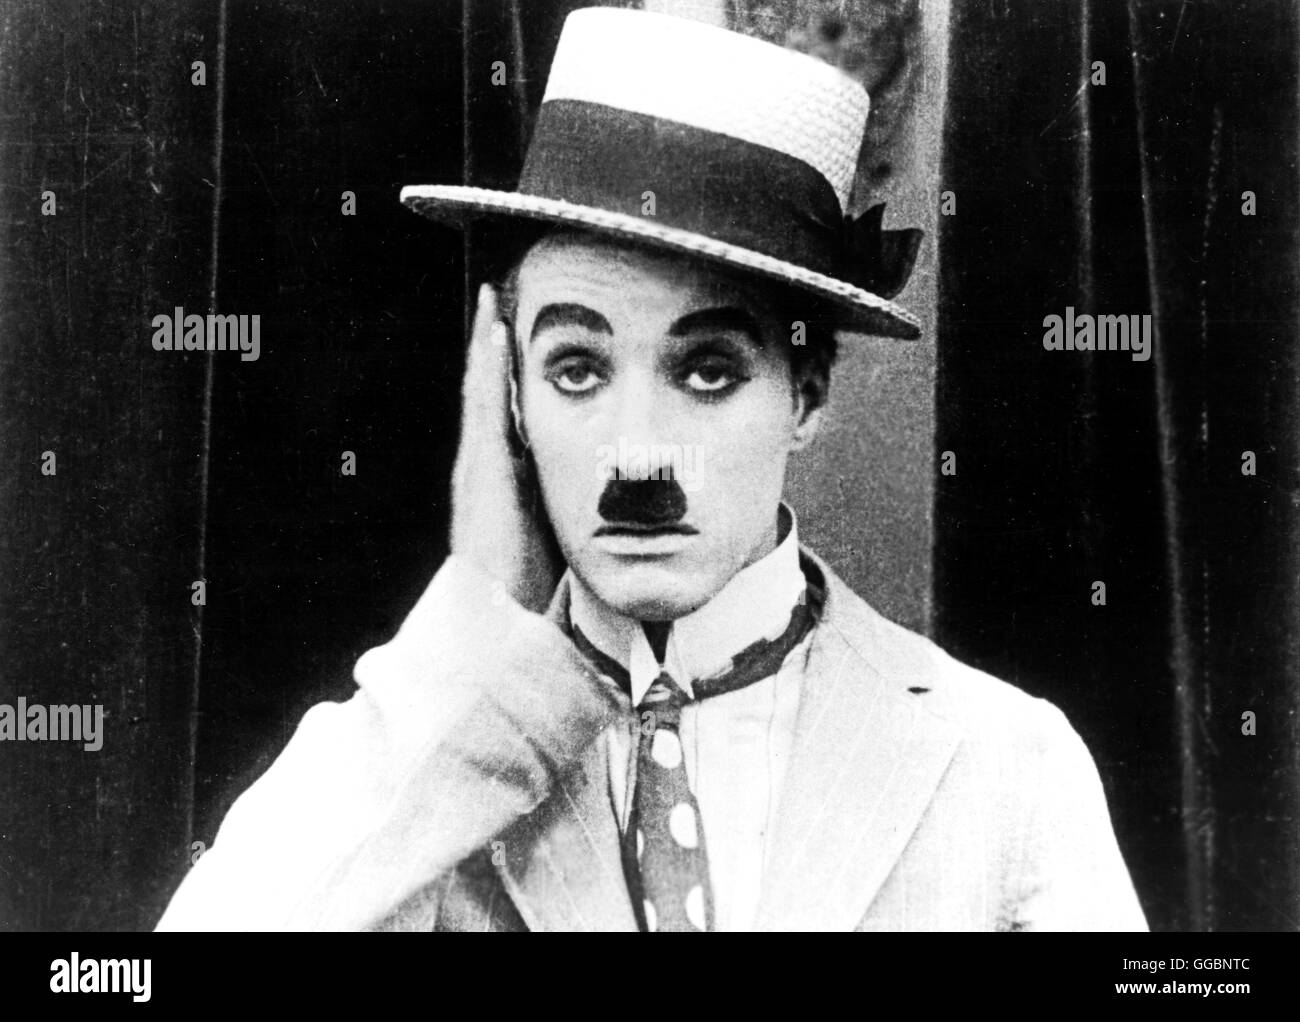 THE CURE / 1917 / Charlie Chaplin, Hut, Kreissaege, Schnauzbart, Krawatte Banque D'Images